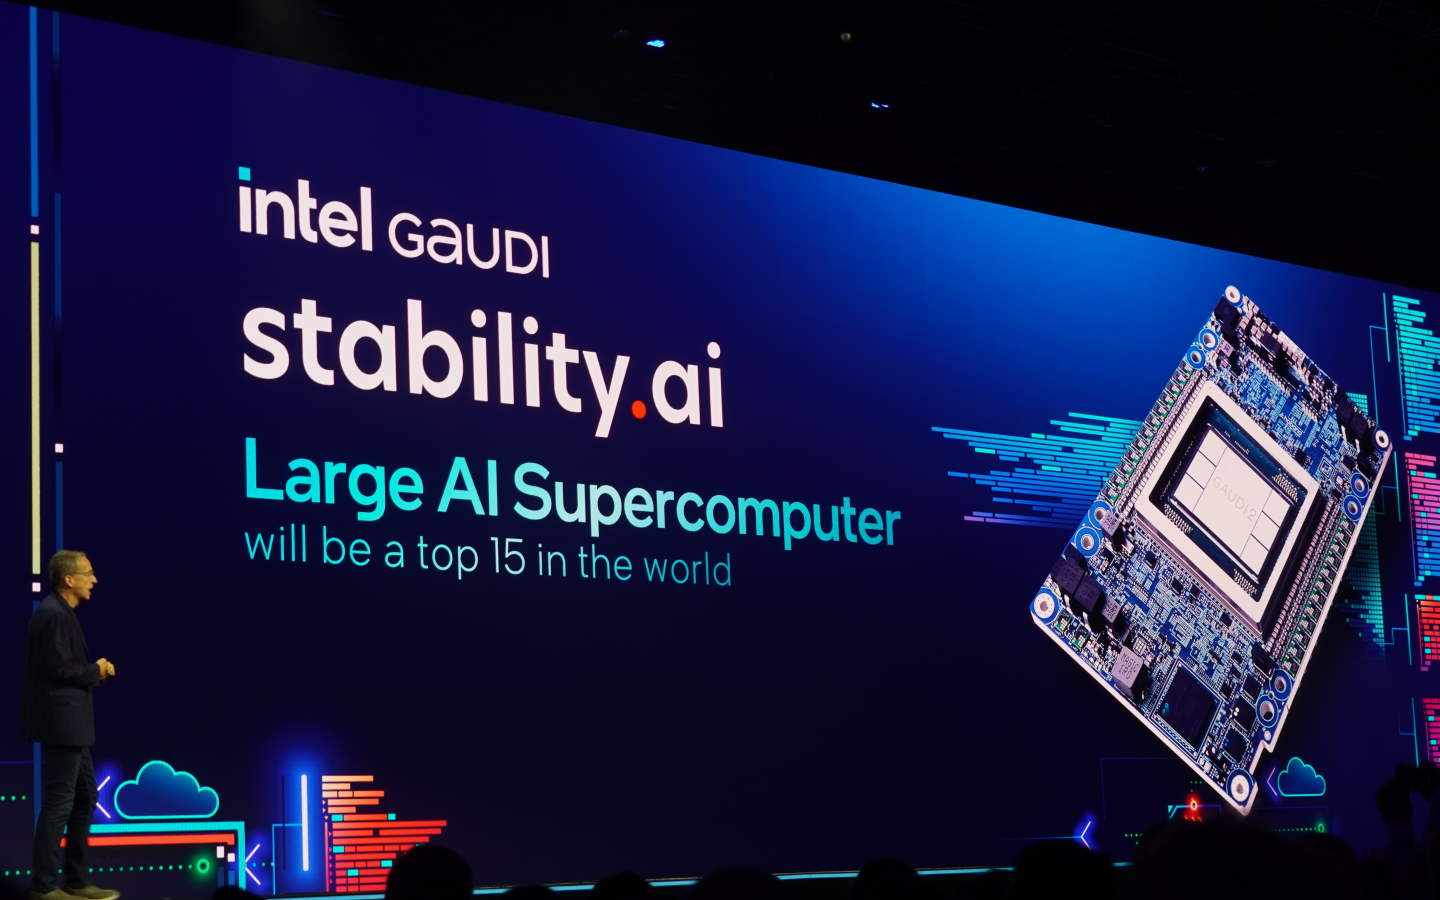 Pat也宣布Stability AI成為Intel重要客戶，透過Xeon處理器以及4000個Gaudi 2加速器打造大型AI超級電腦。